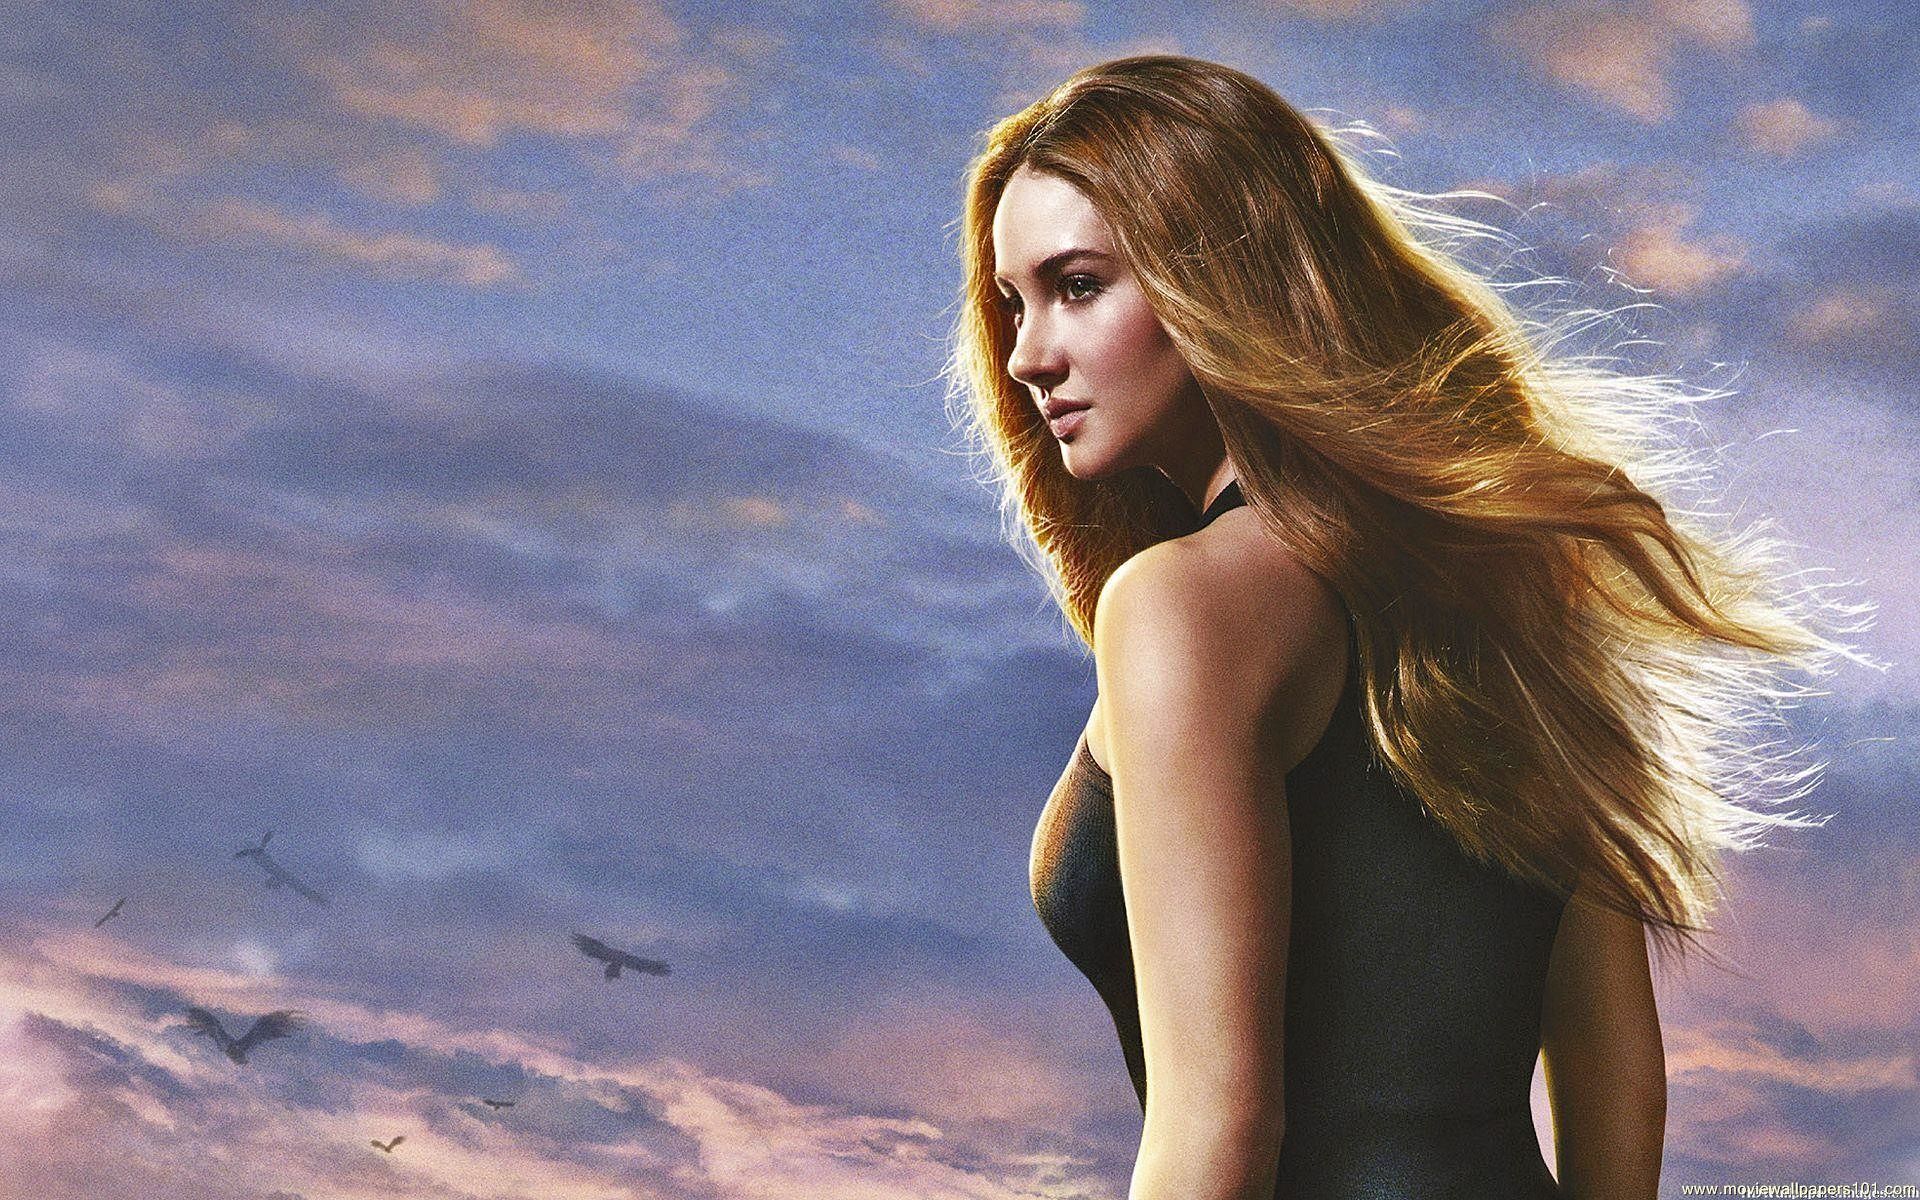 The Divergent Series: Allegiant Wallpaper High Resolution